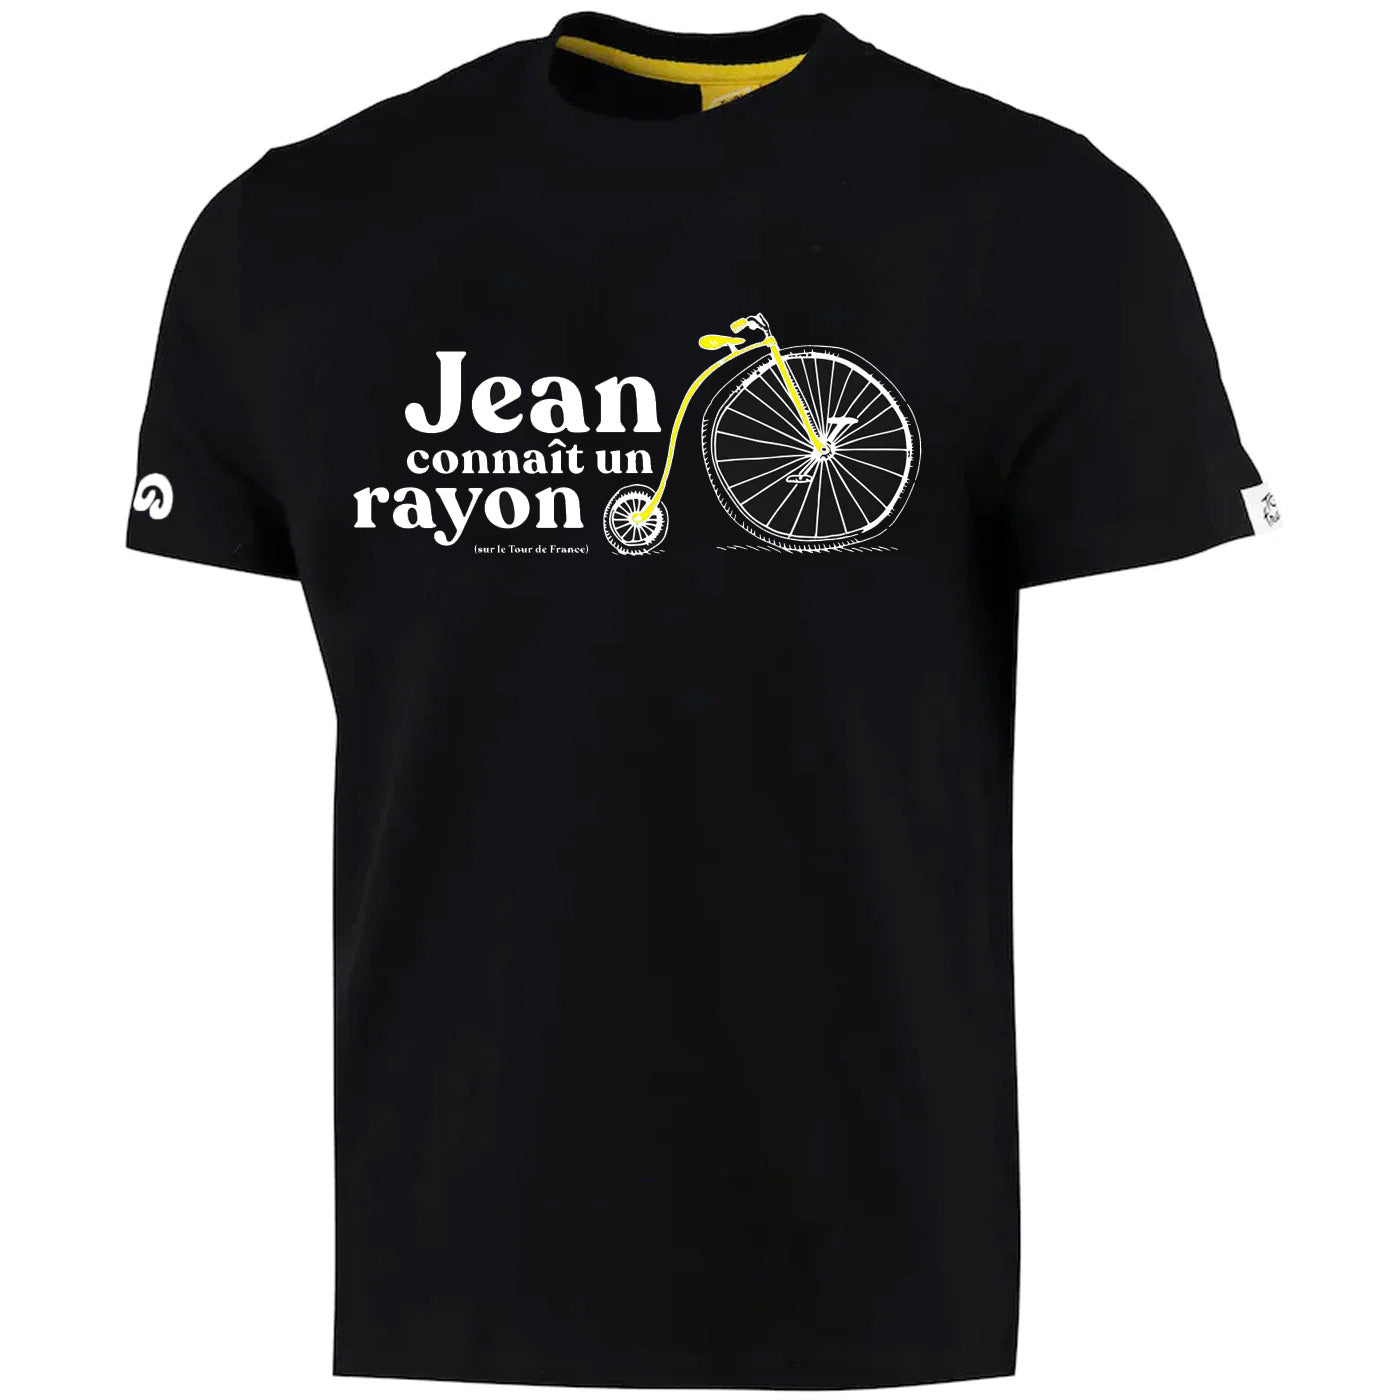 Tour de France Rayon t-shirt - Black